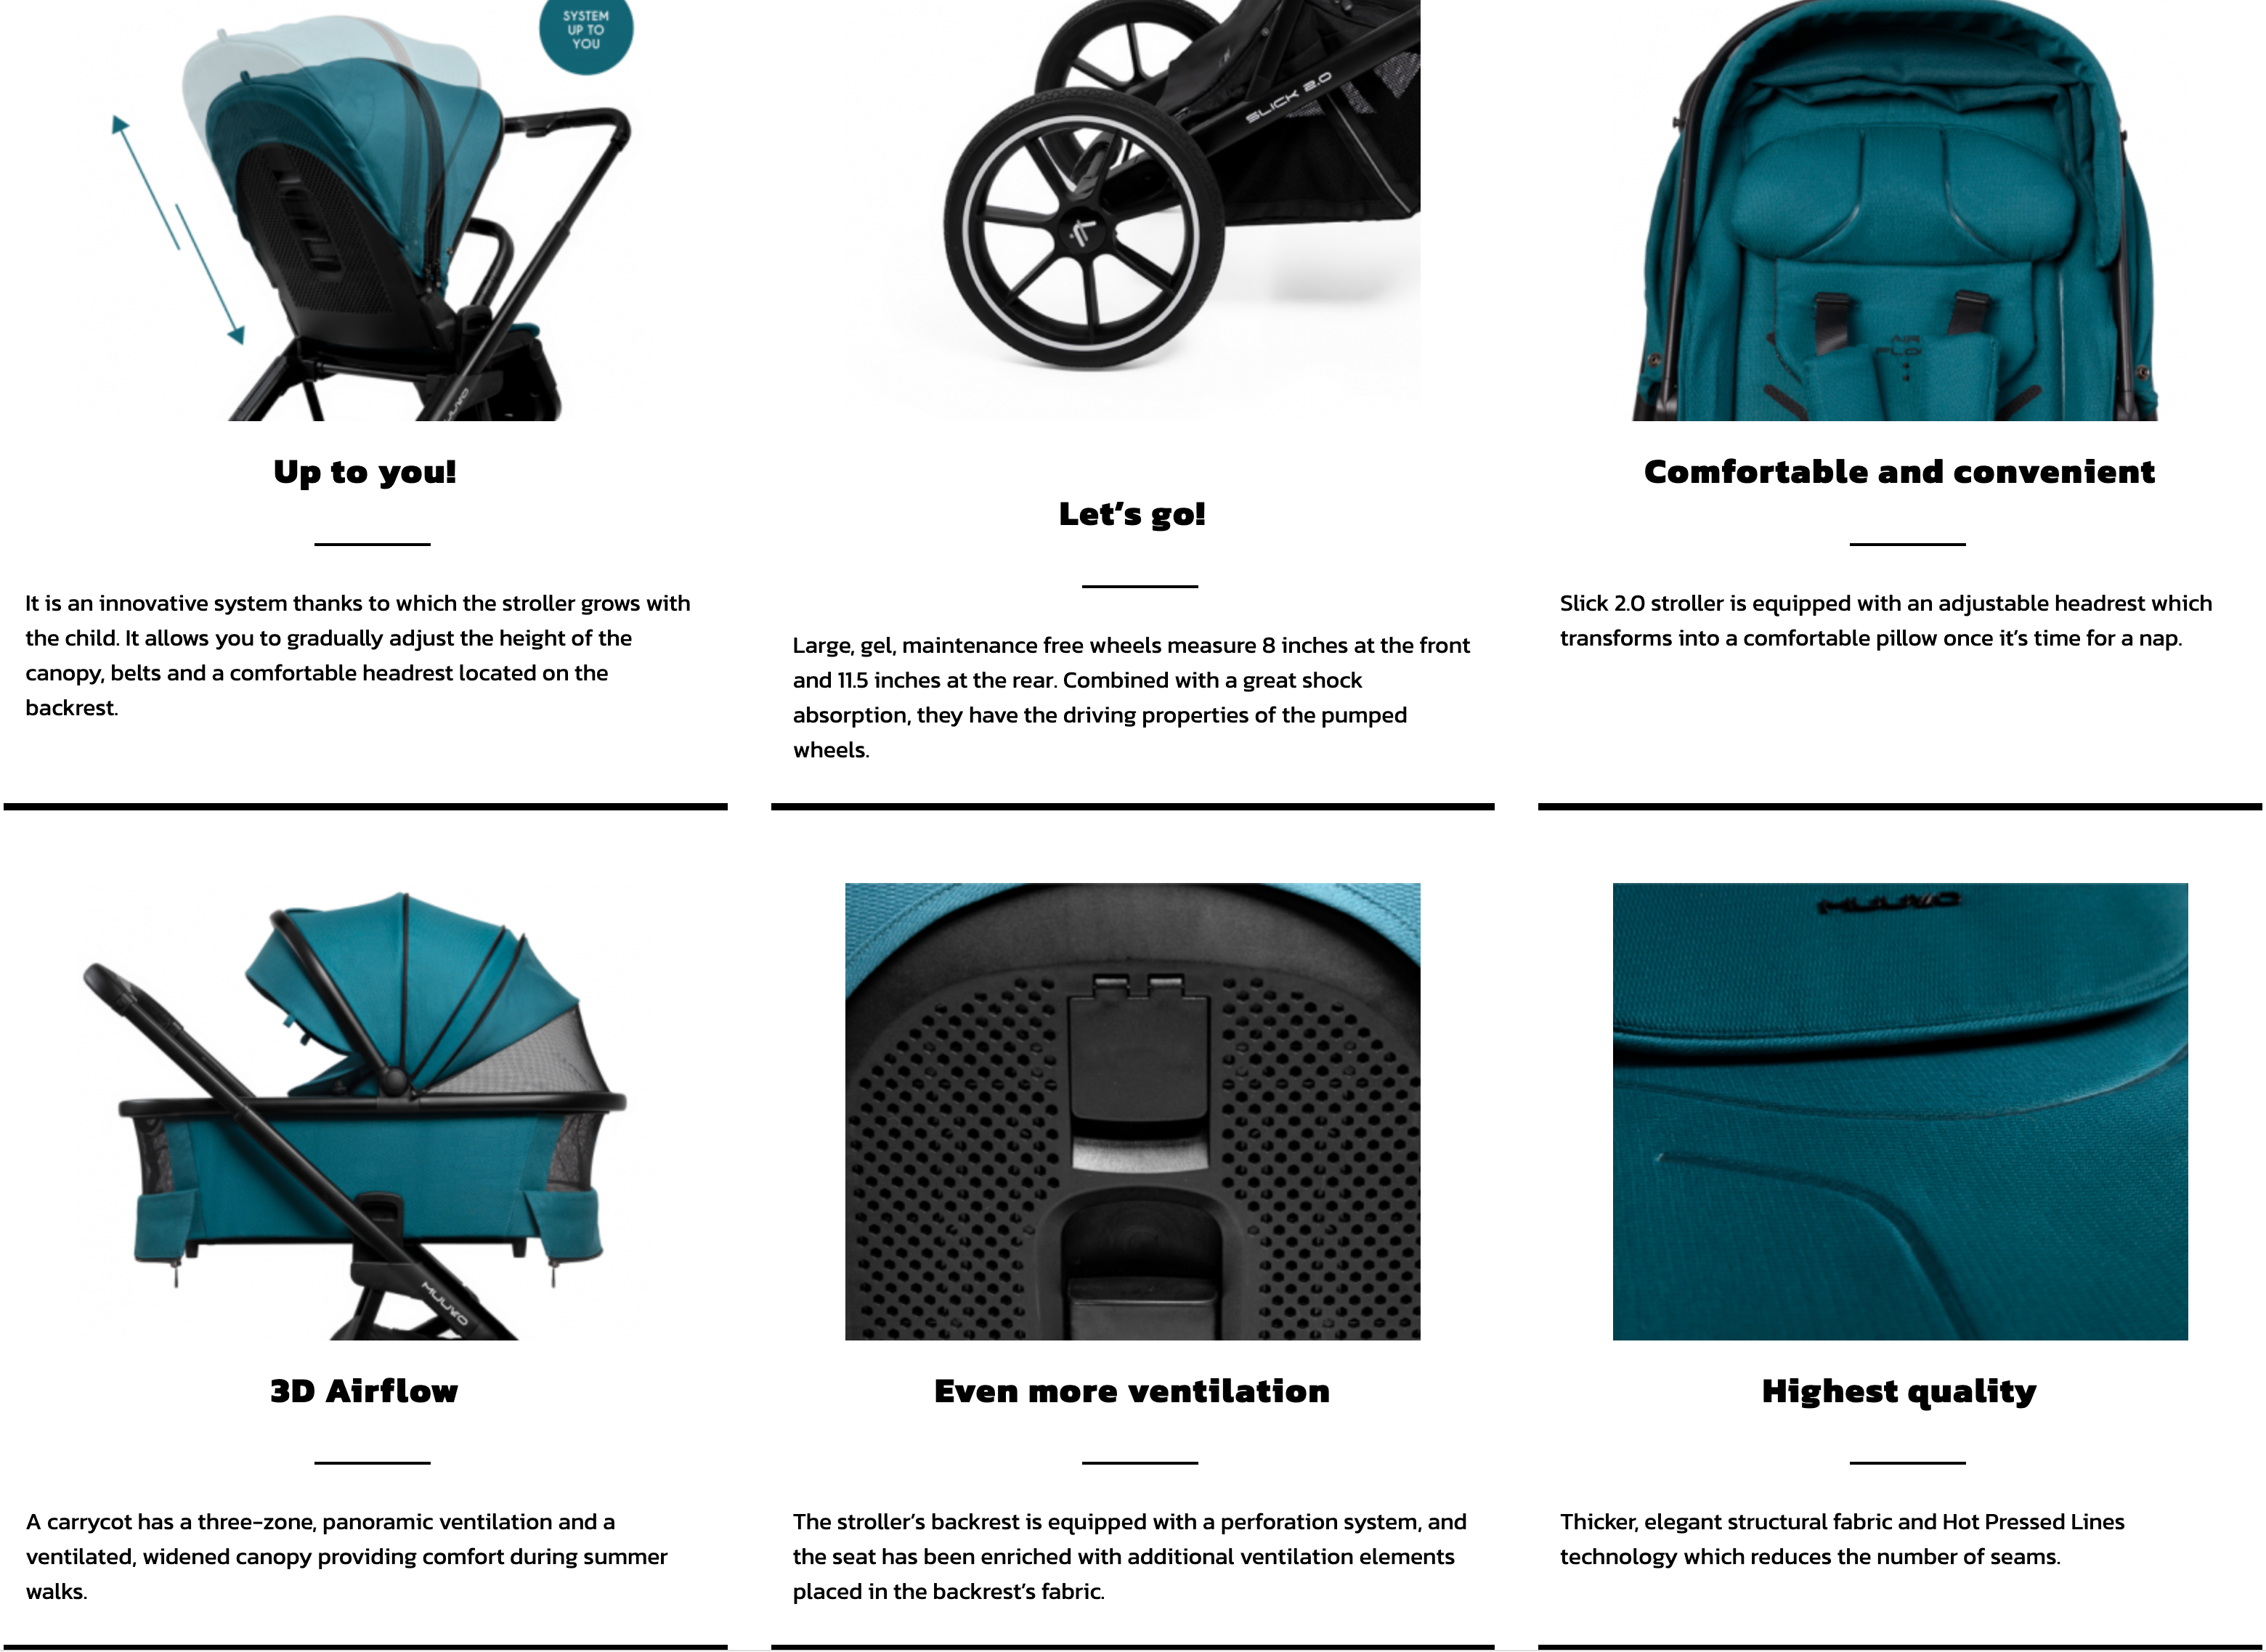 MUUVO Slick 2.0 baby stroller 2 in 1, carry coat and stroller, color Light Gray